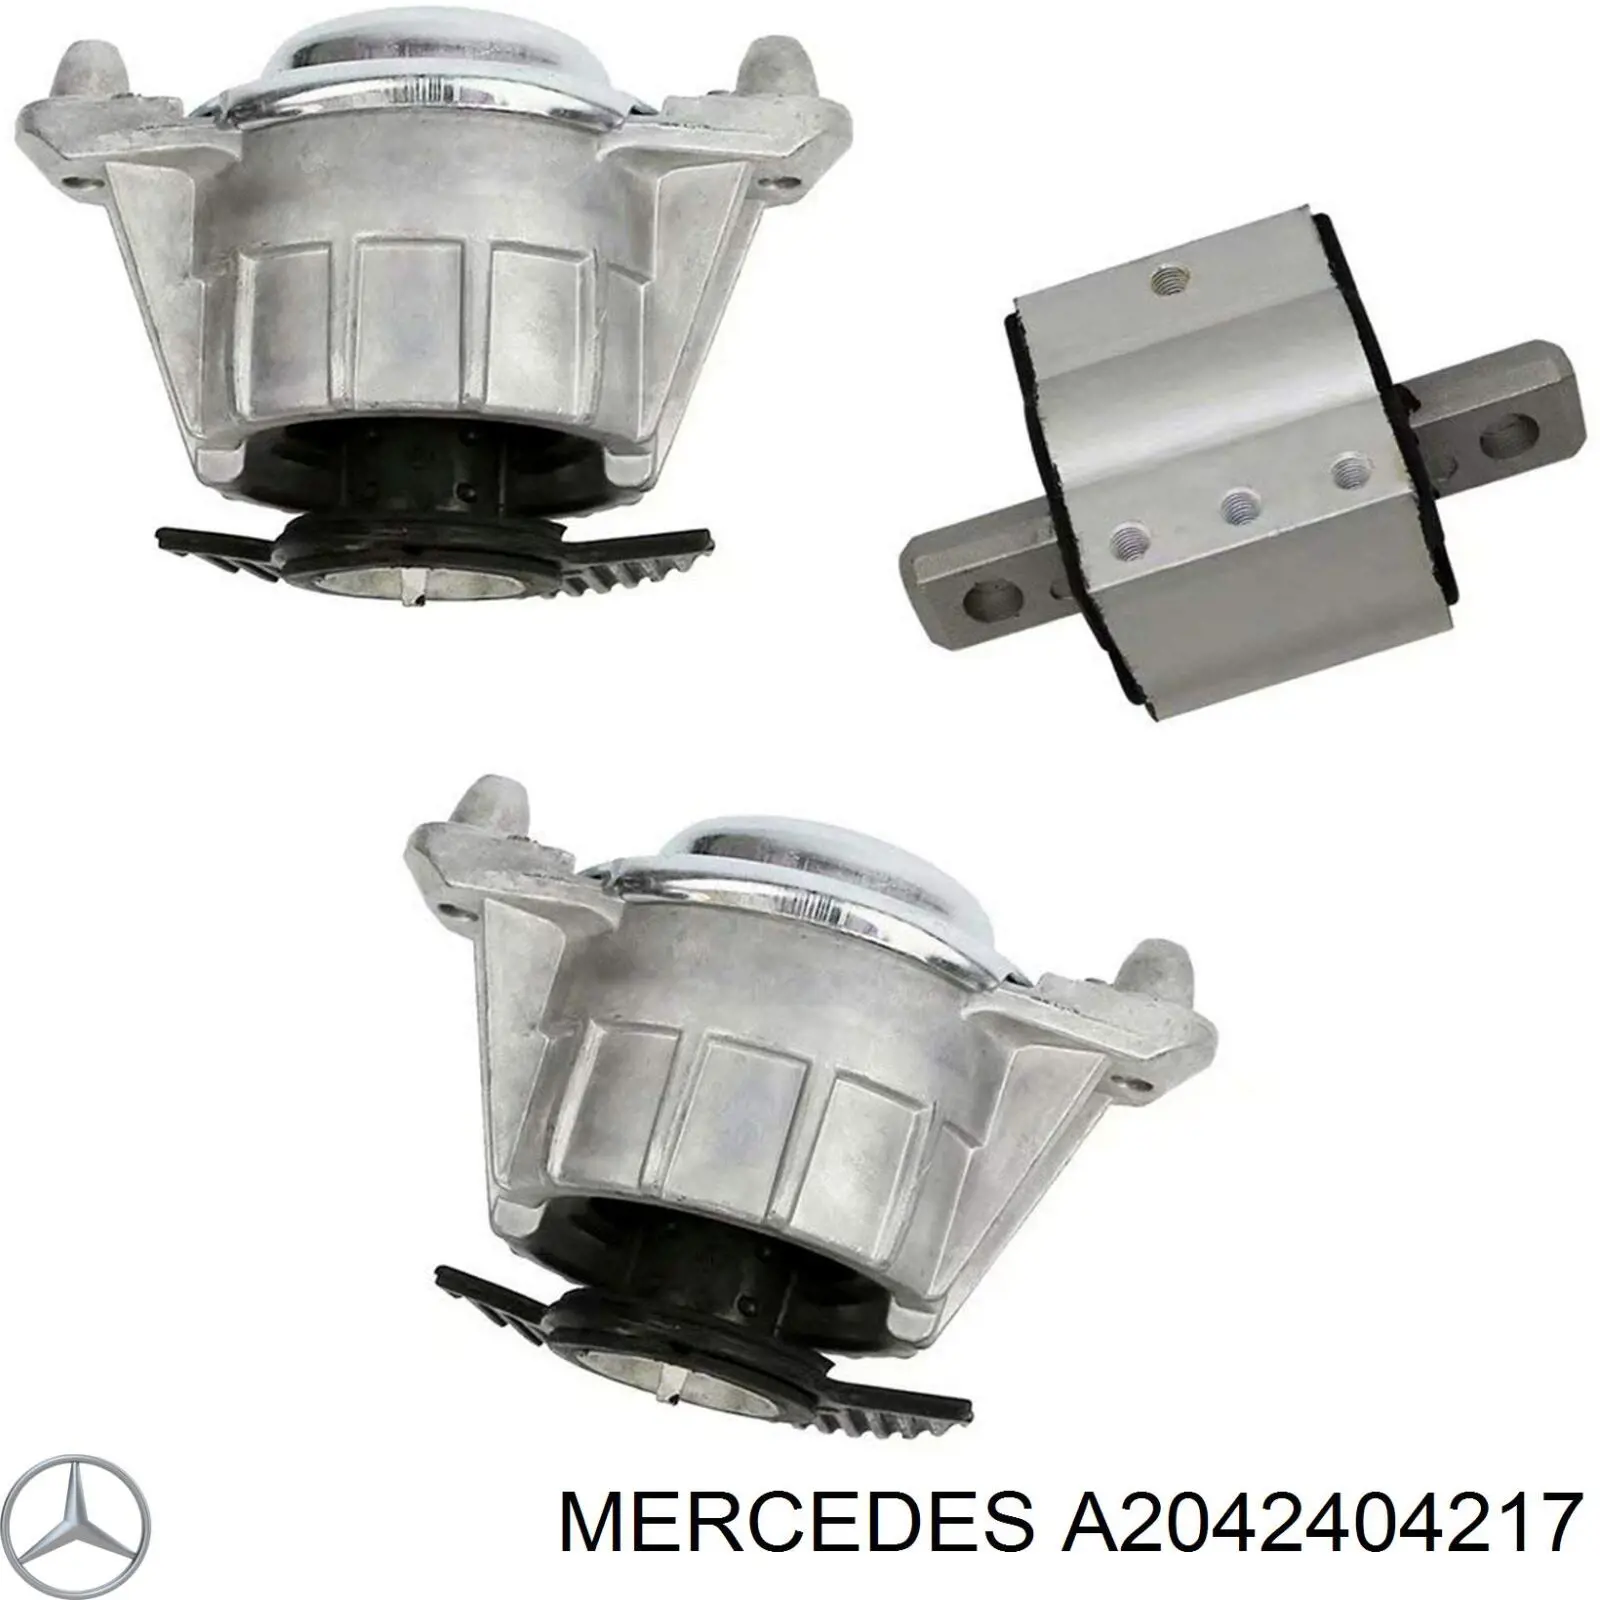 A2042404217 Mercedes подушка (опора двигателя левая/правая)